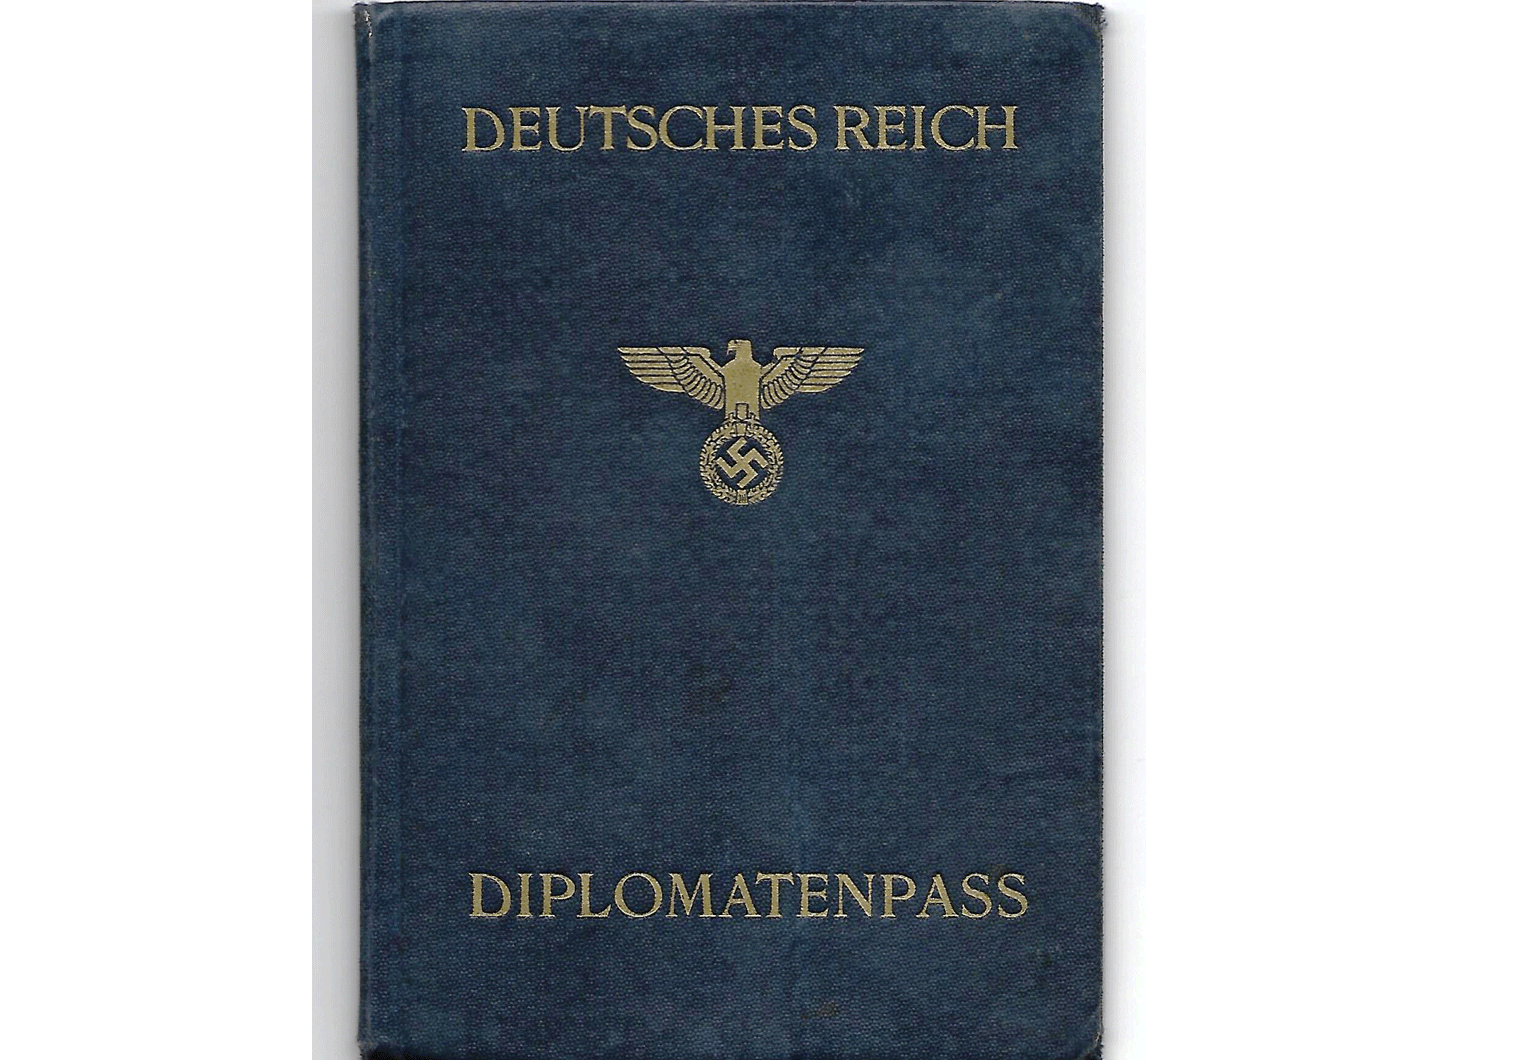 WW2 Diplomatenpass